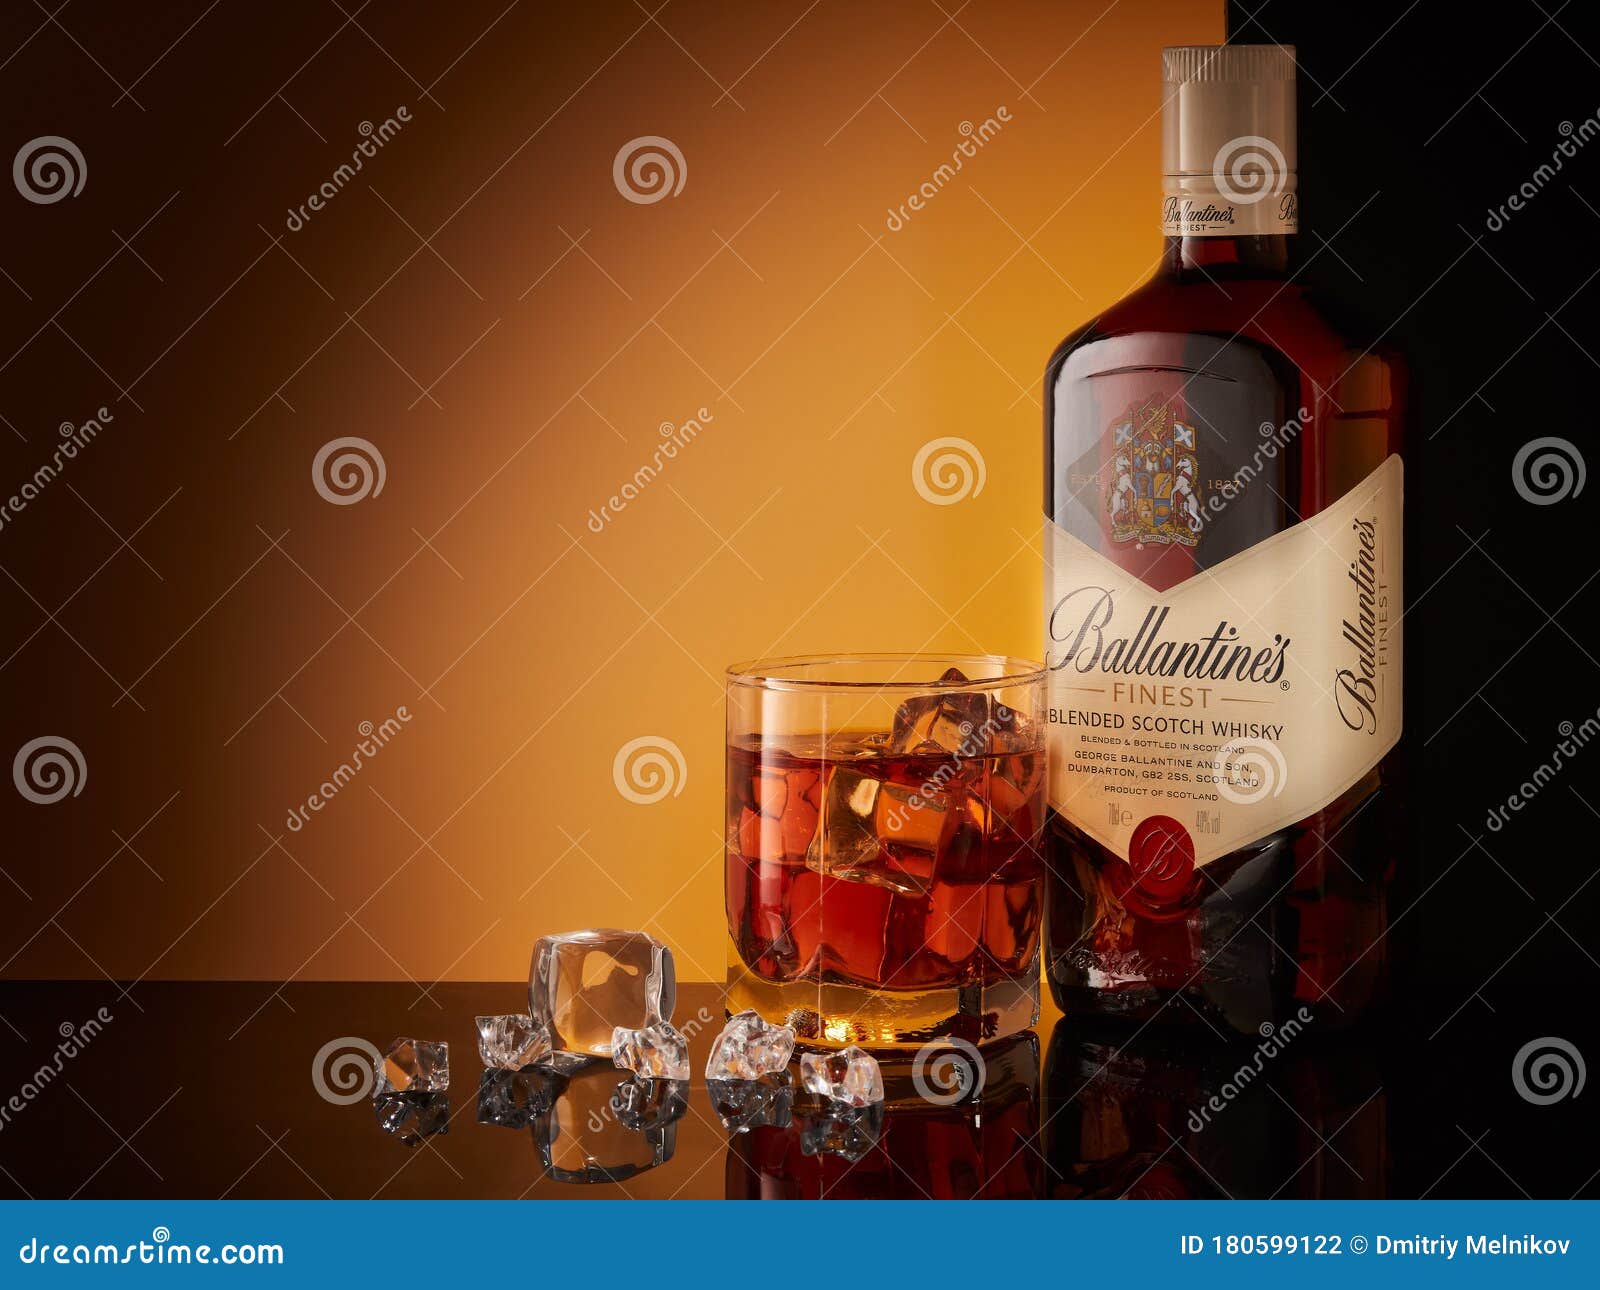 Ballantines - Ice and Liquor